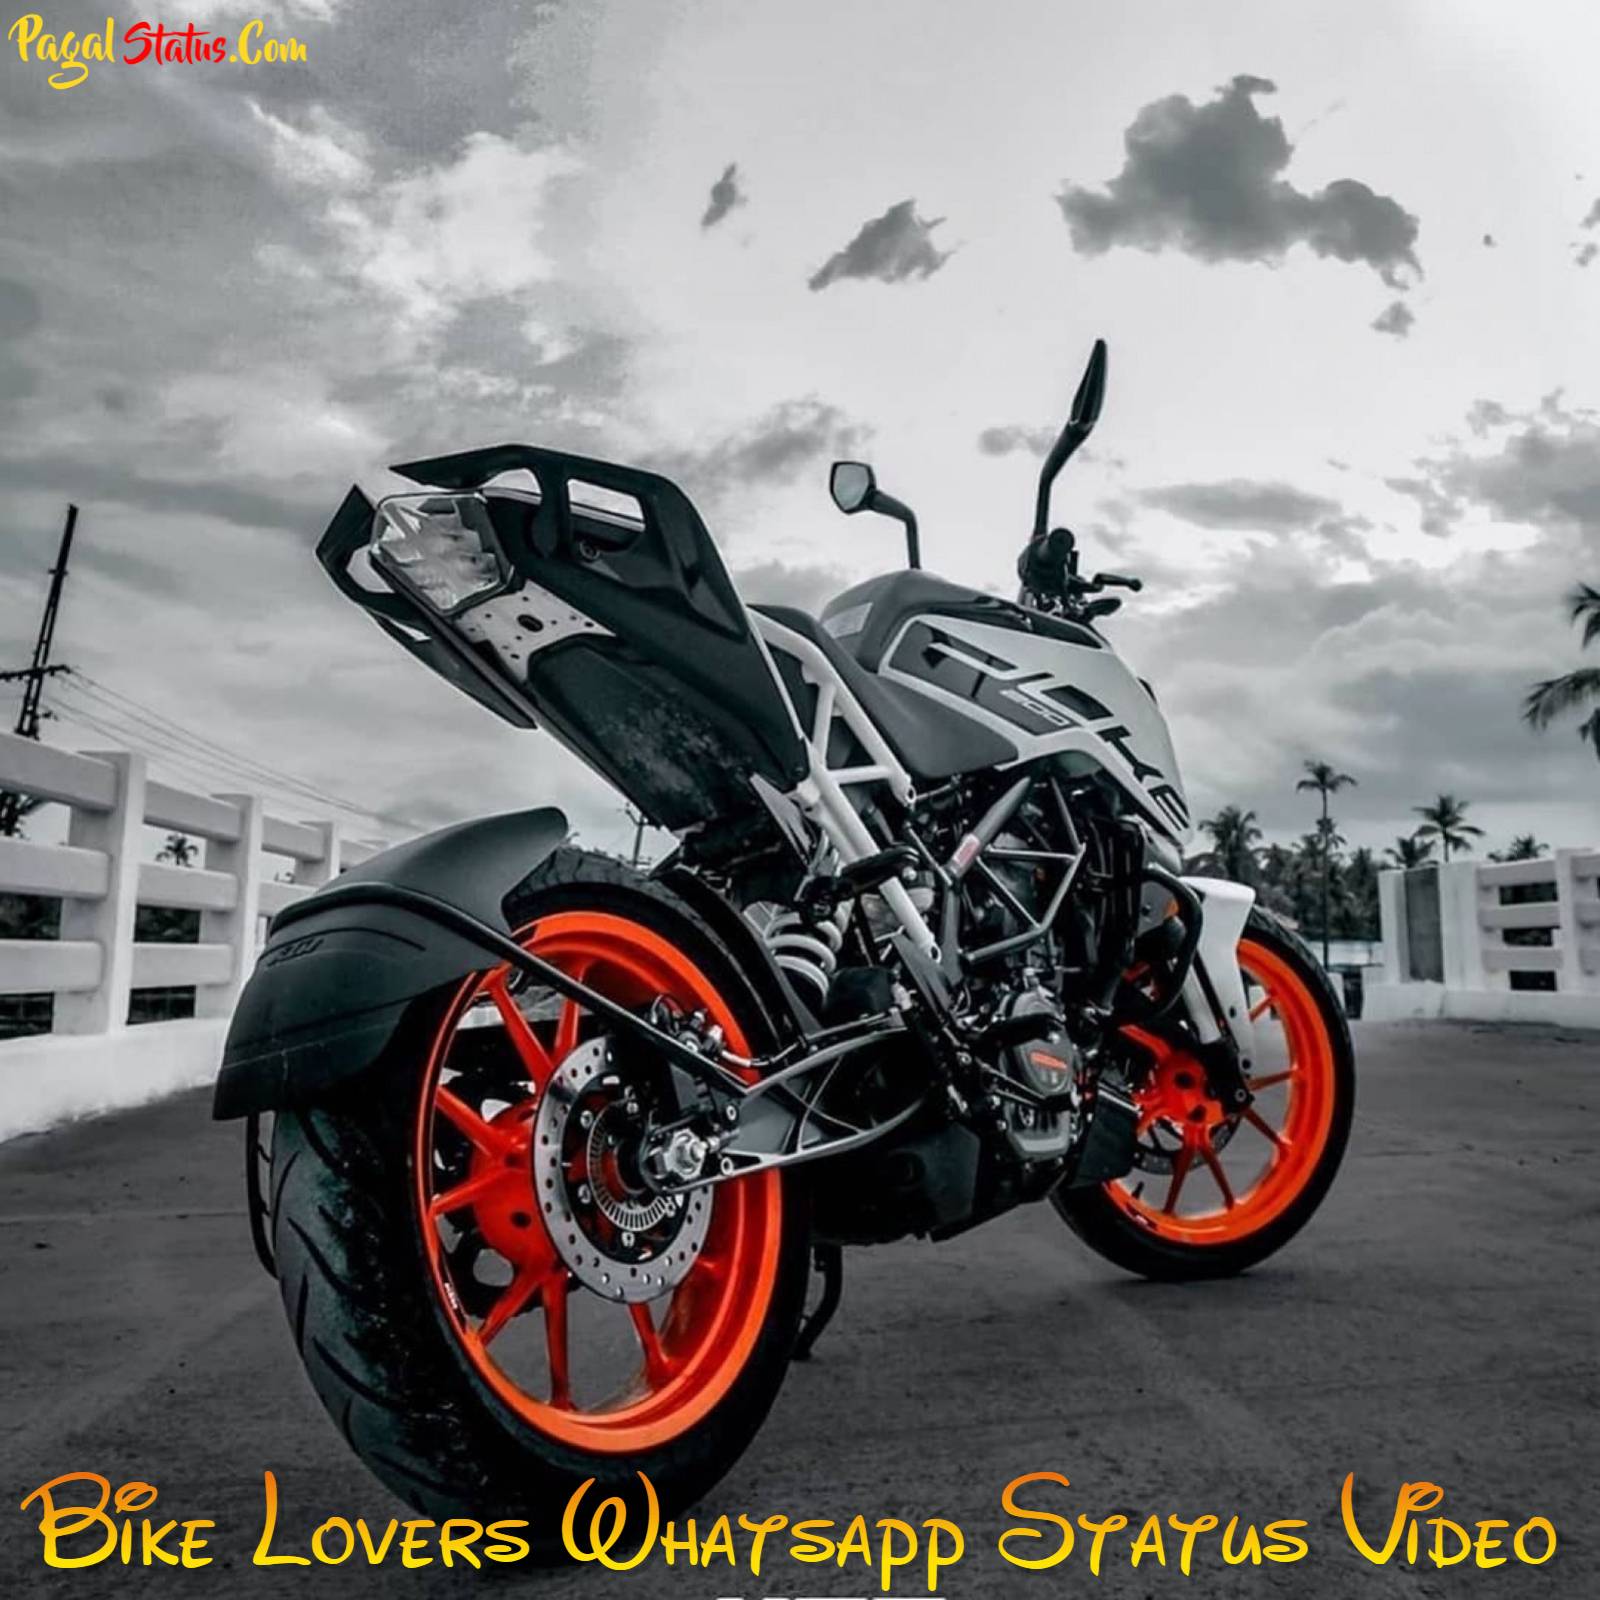 Bike Lovers Whatsapp Status Video Download, Bike Lover Attitude Status